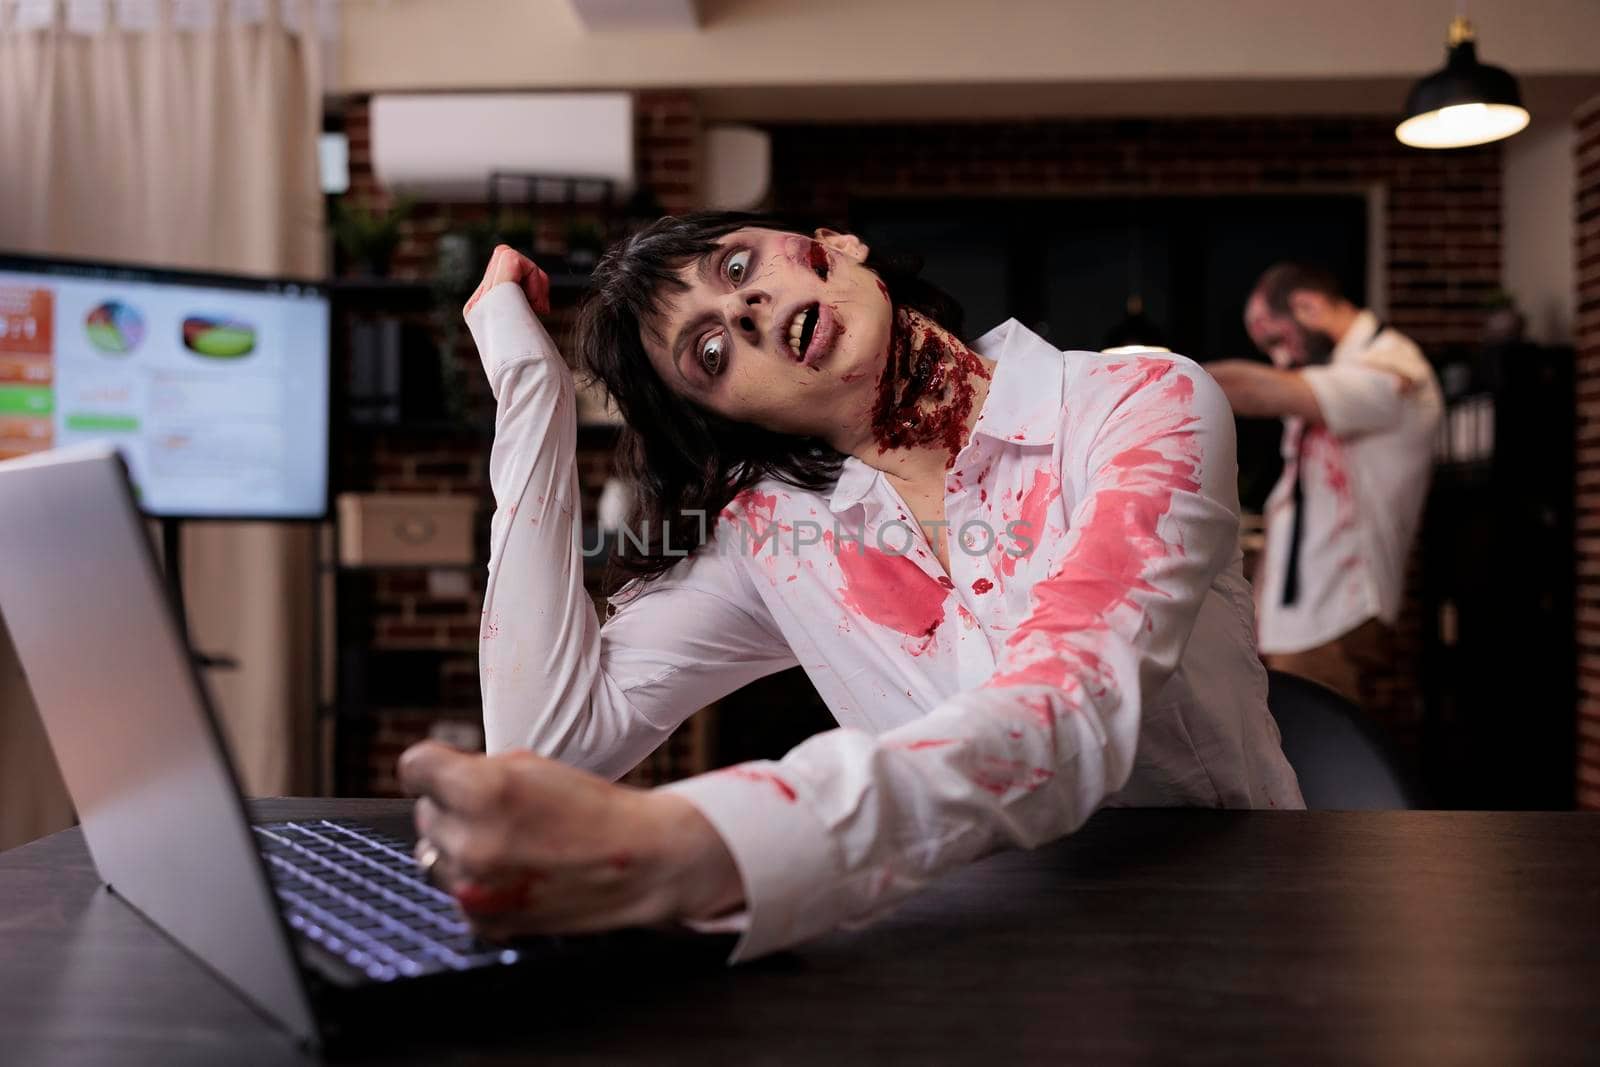 Horror cruel zombie using laptop at desk by DCStudio